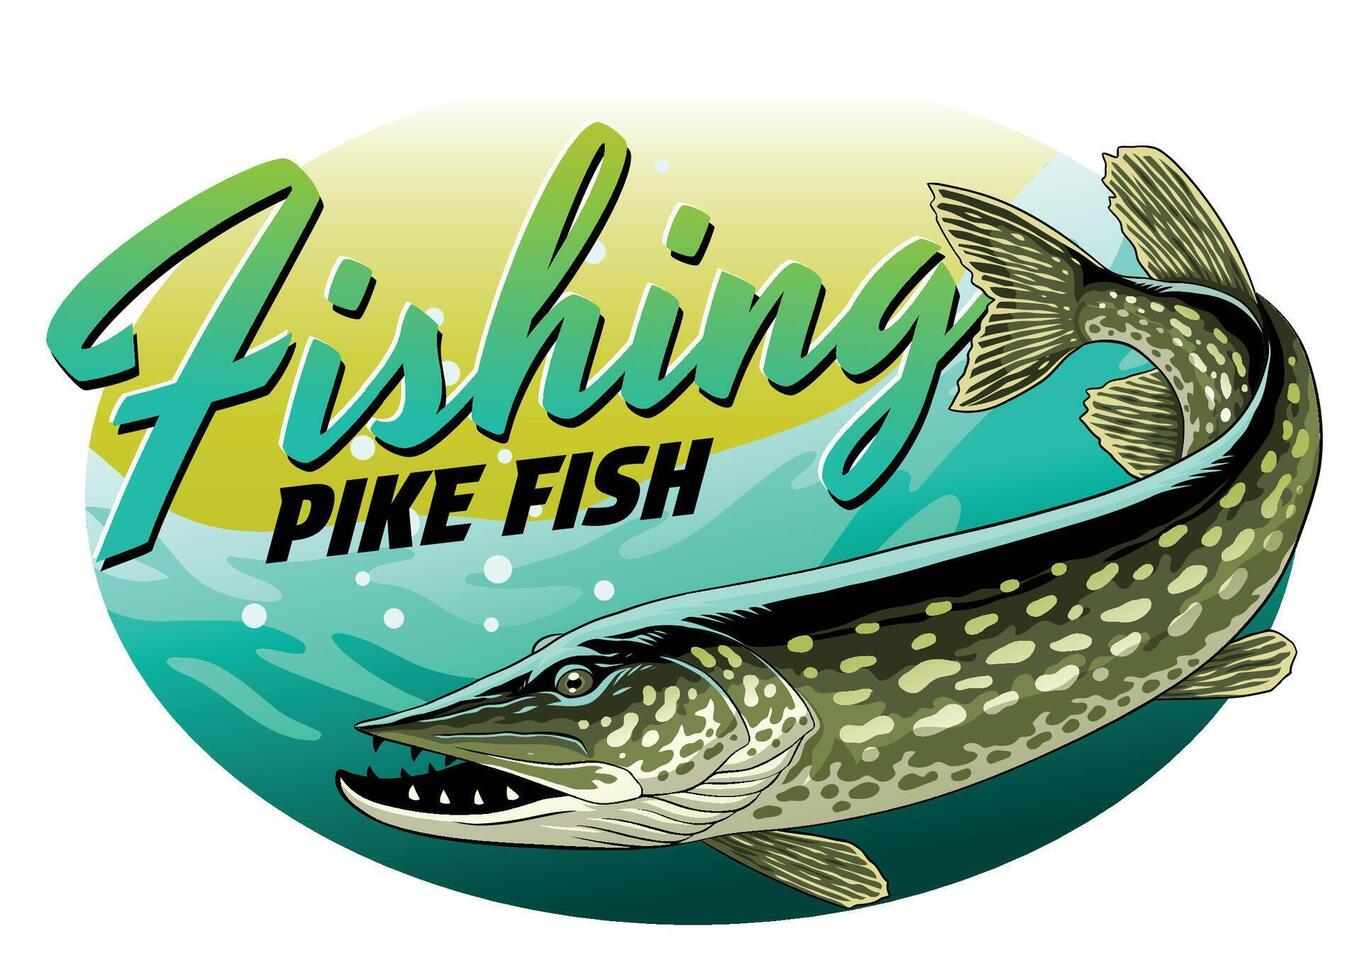 Pike Fish Fishing Vintage T-Shirt Design vector